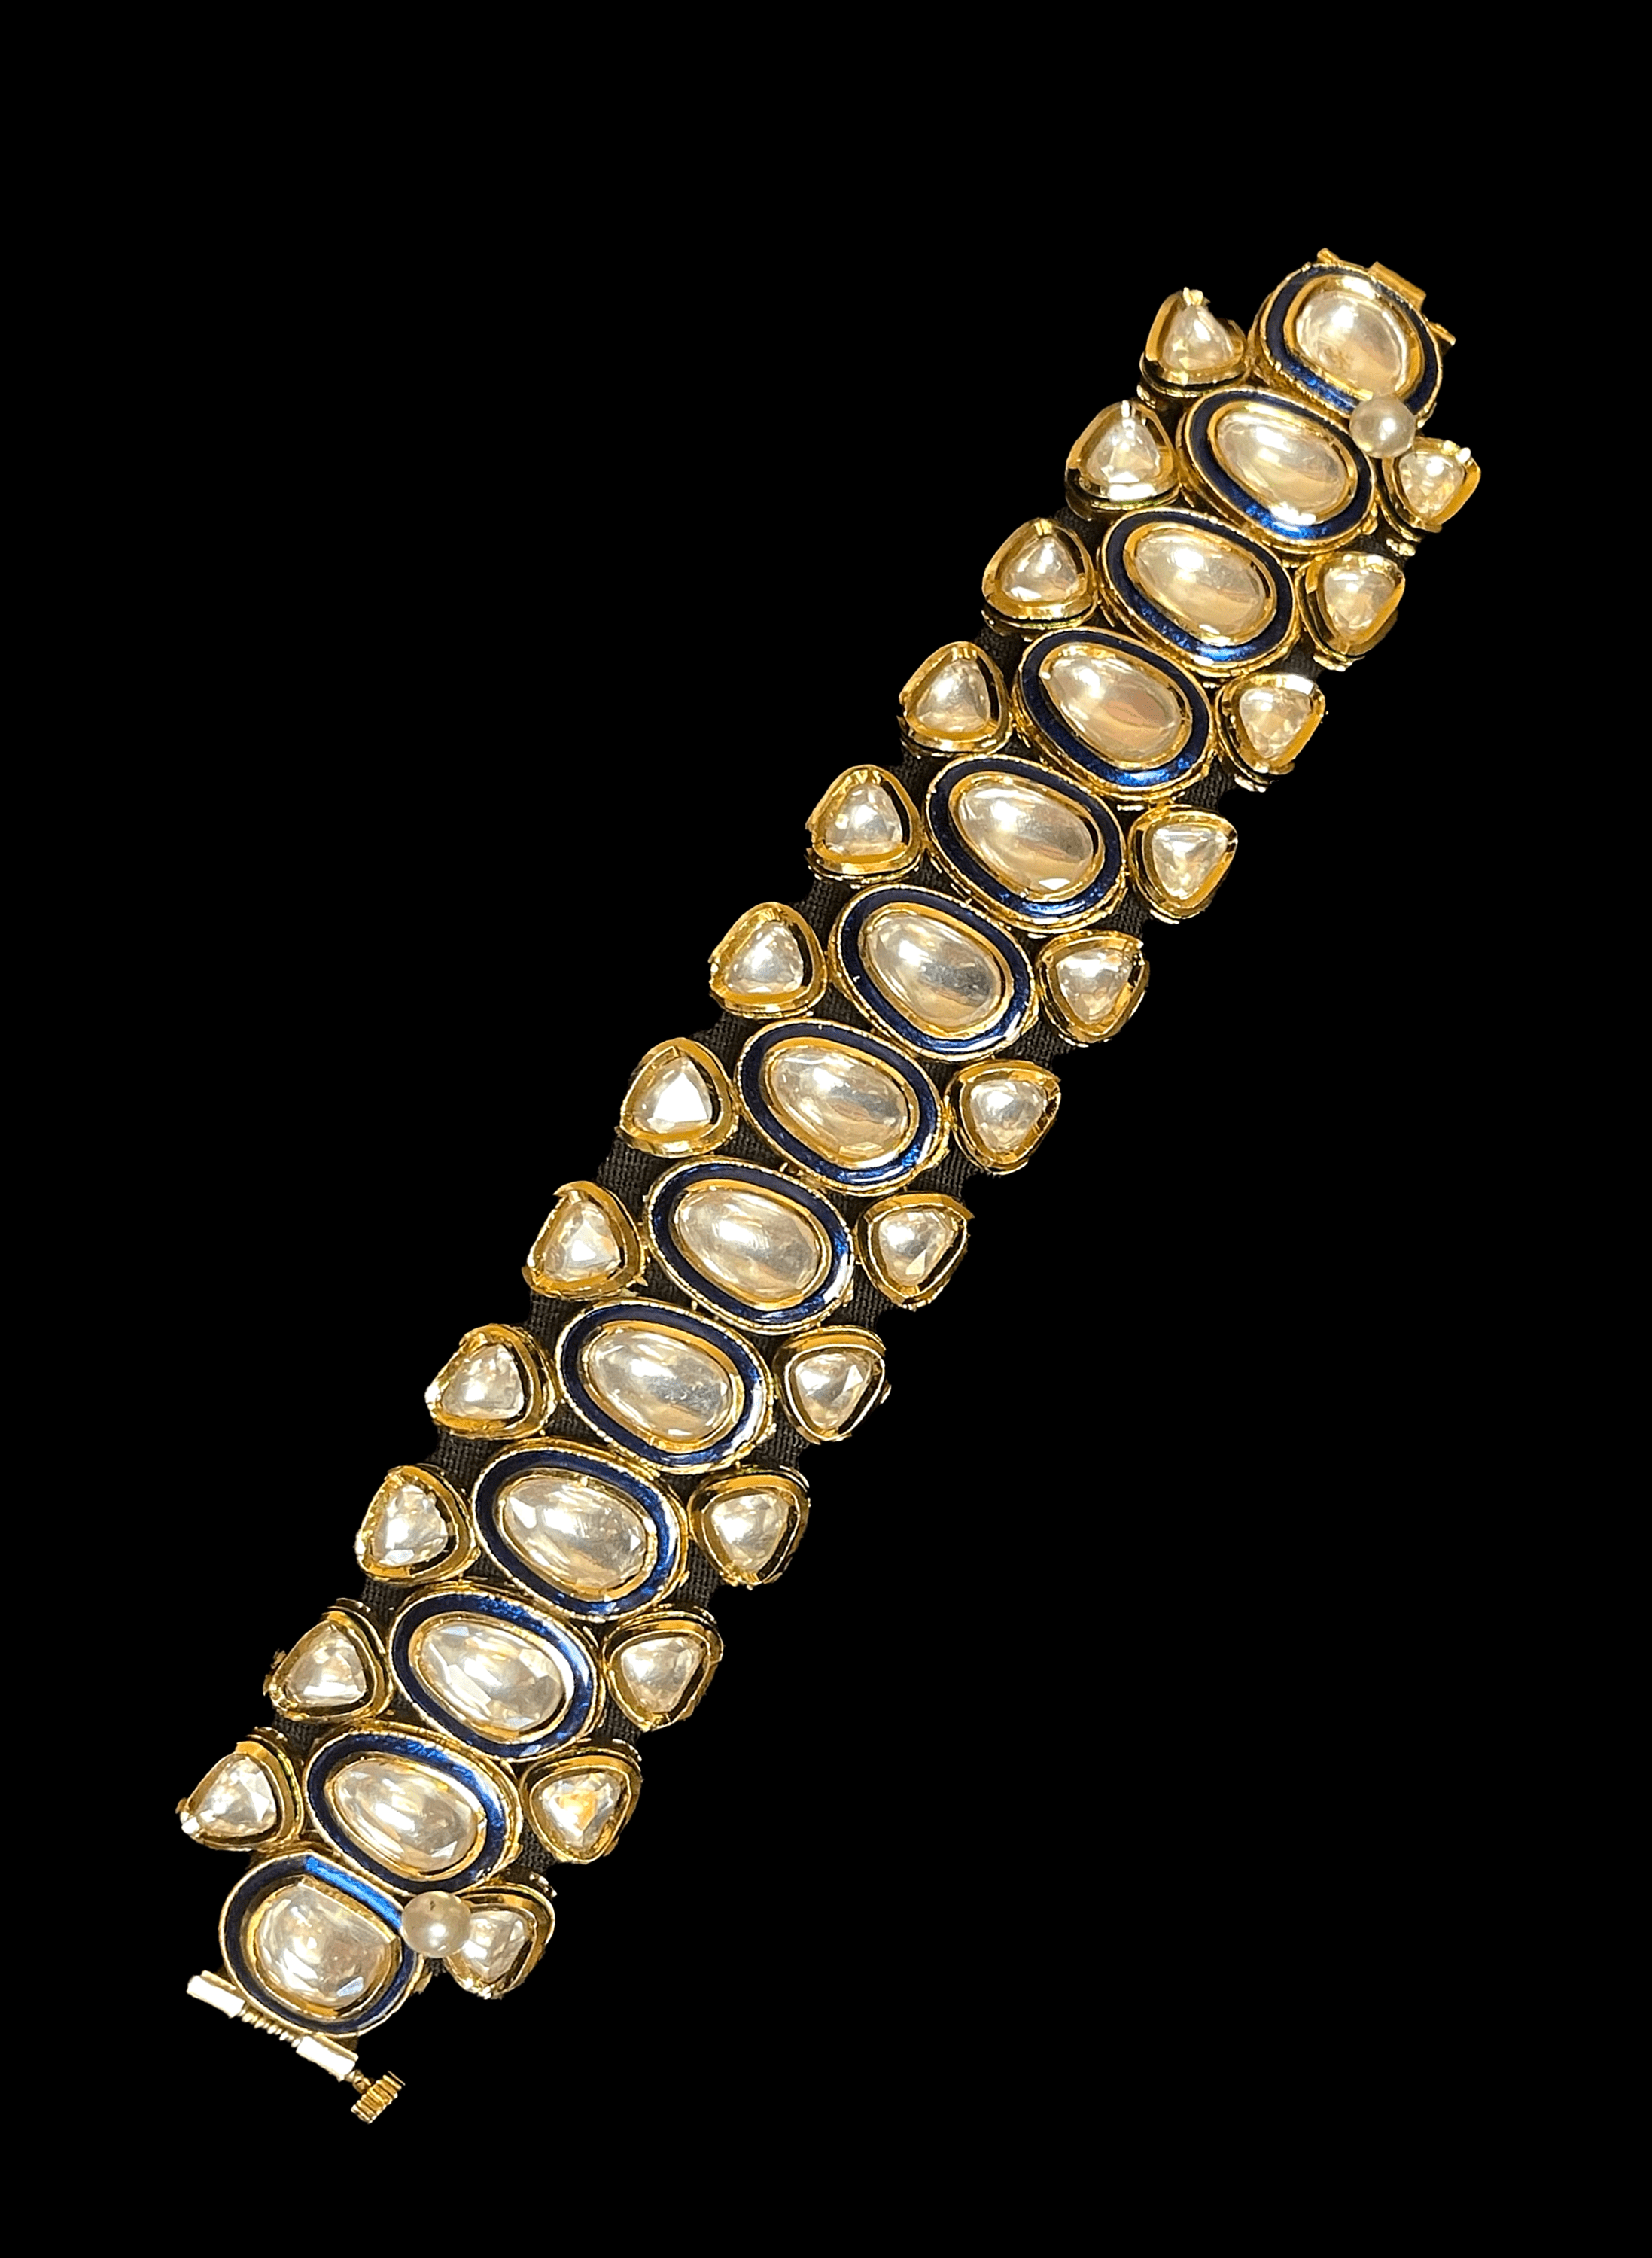 Meenakari jewelry with Kundan stone setting - Indian bridal bracelet